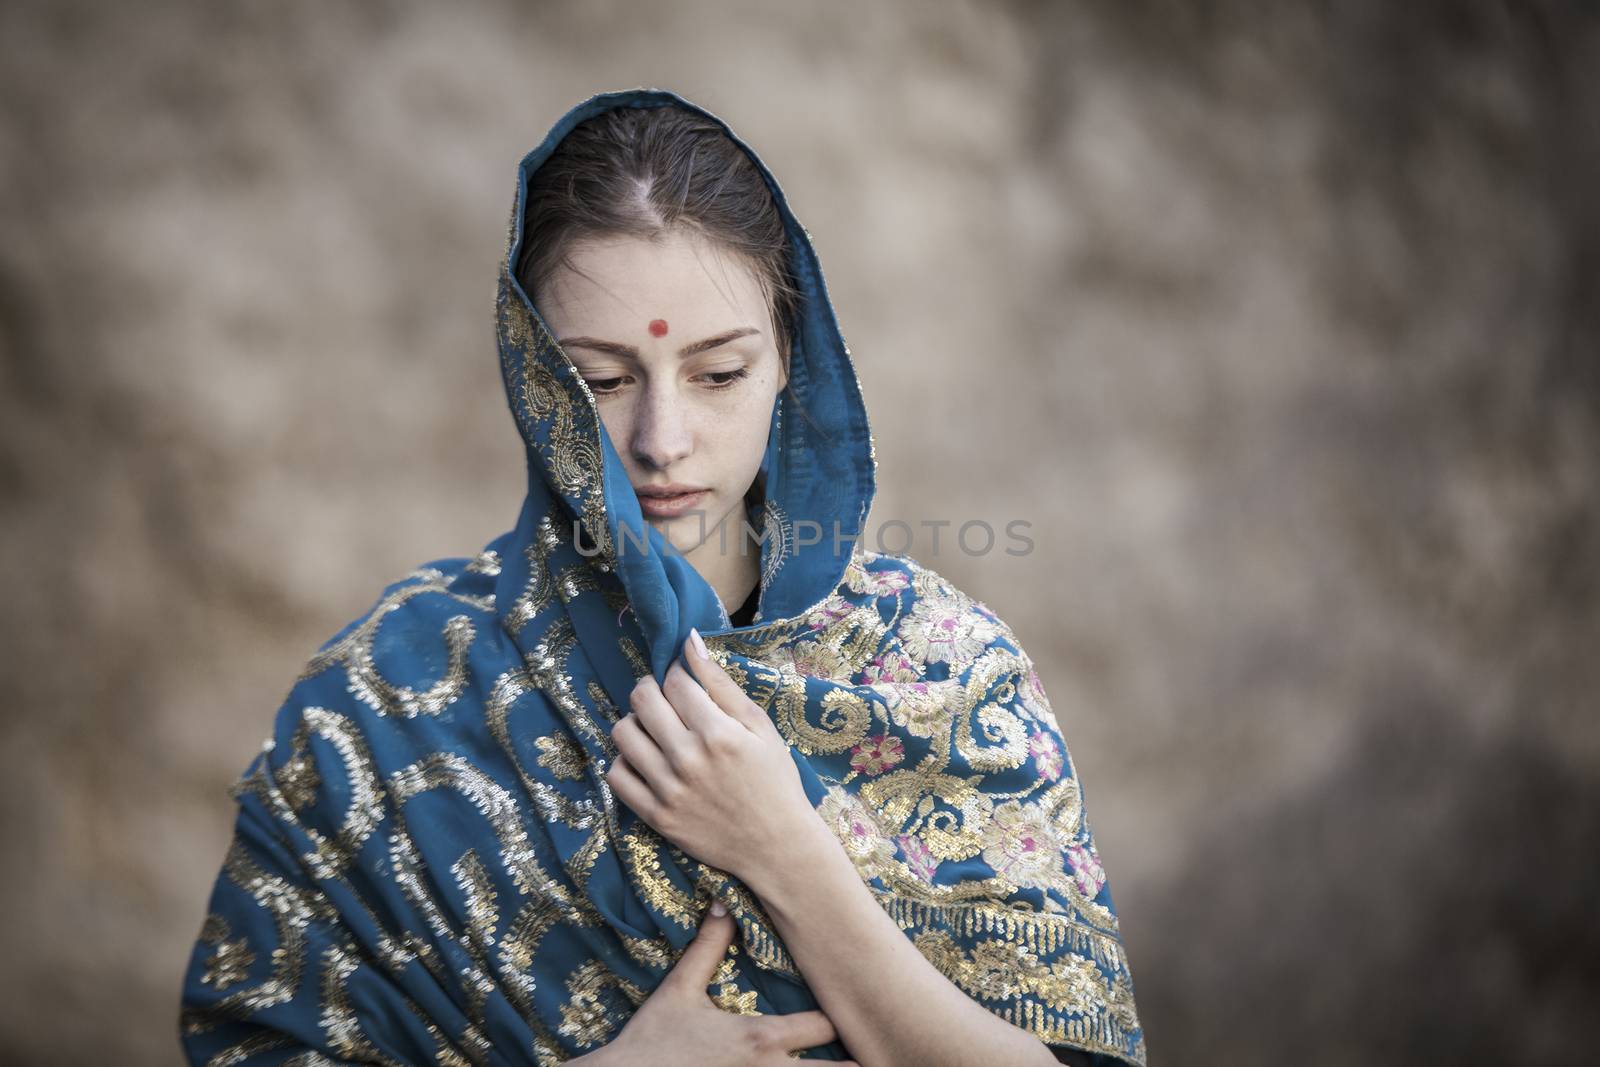 European Indian in sari by snep_photo